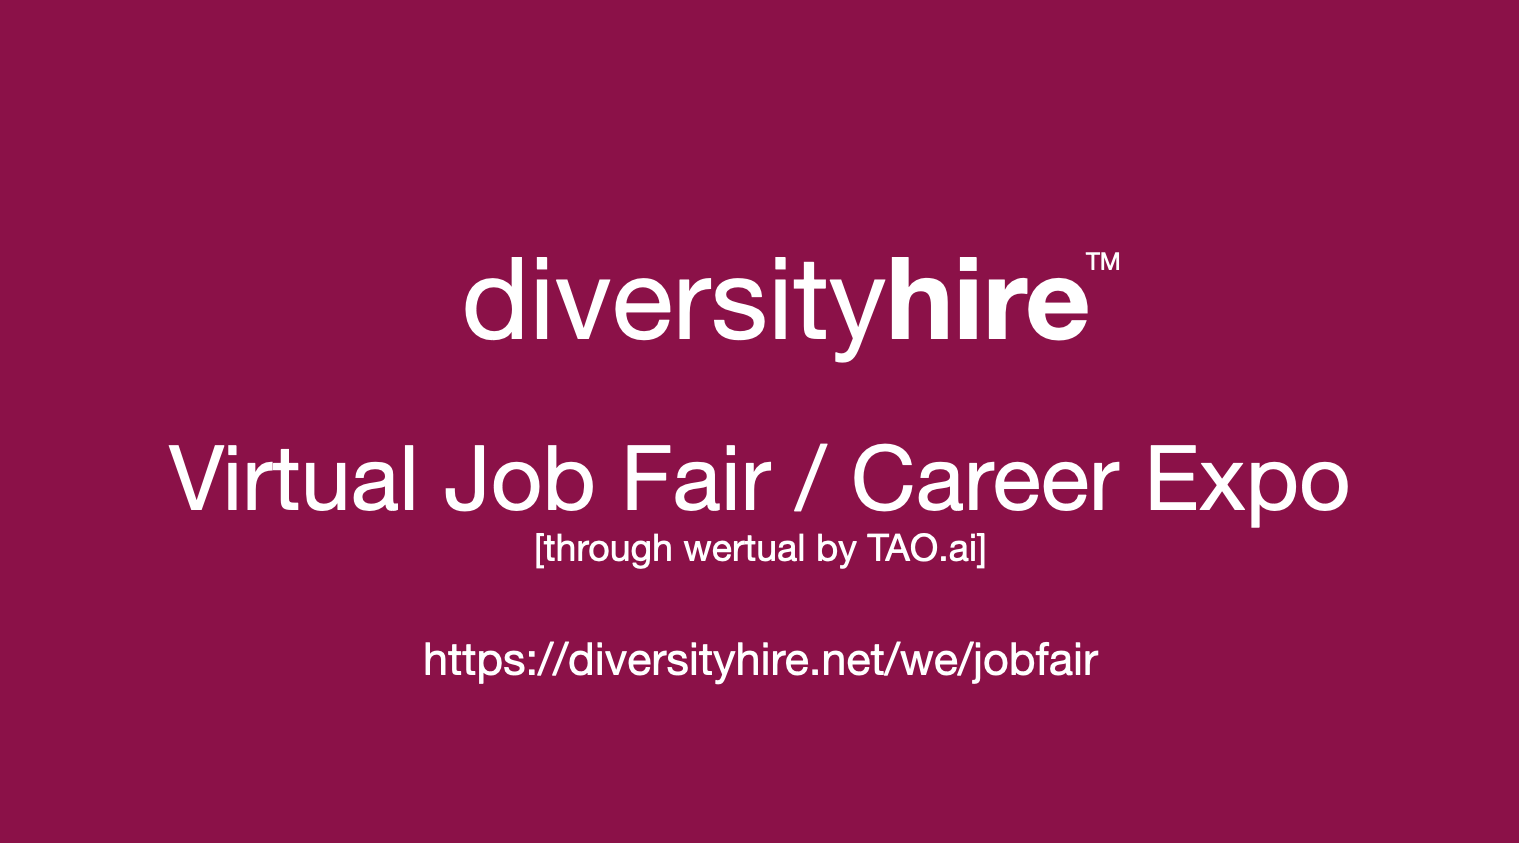 #DiversityHire Virtual Job Fair / Career Expo #Diversity Event #Chicago